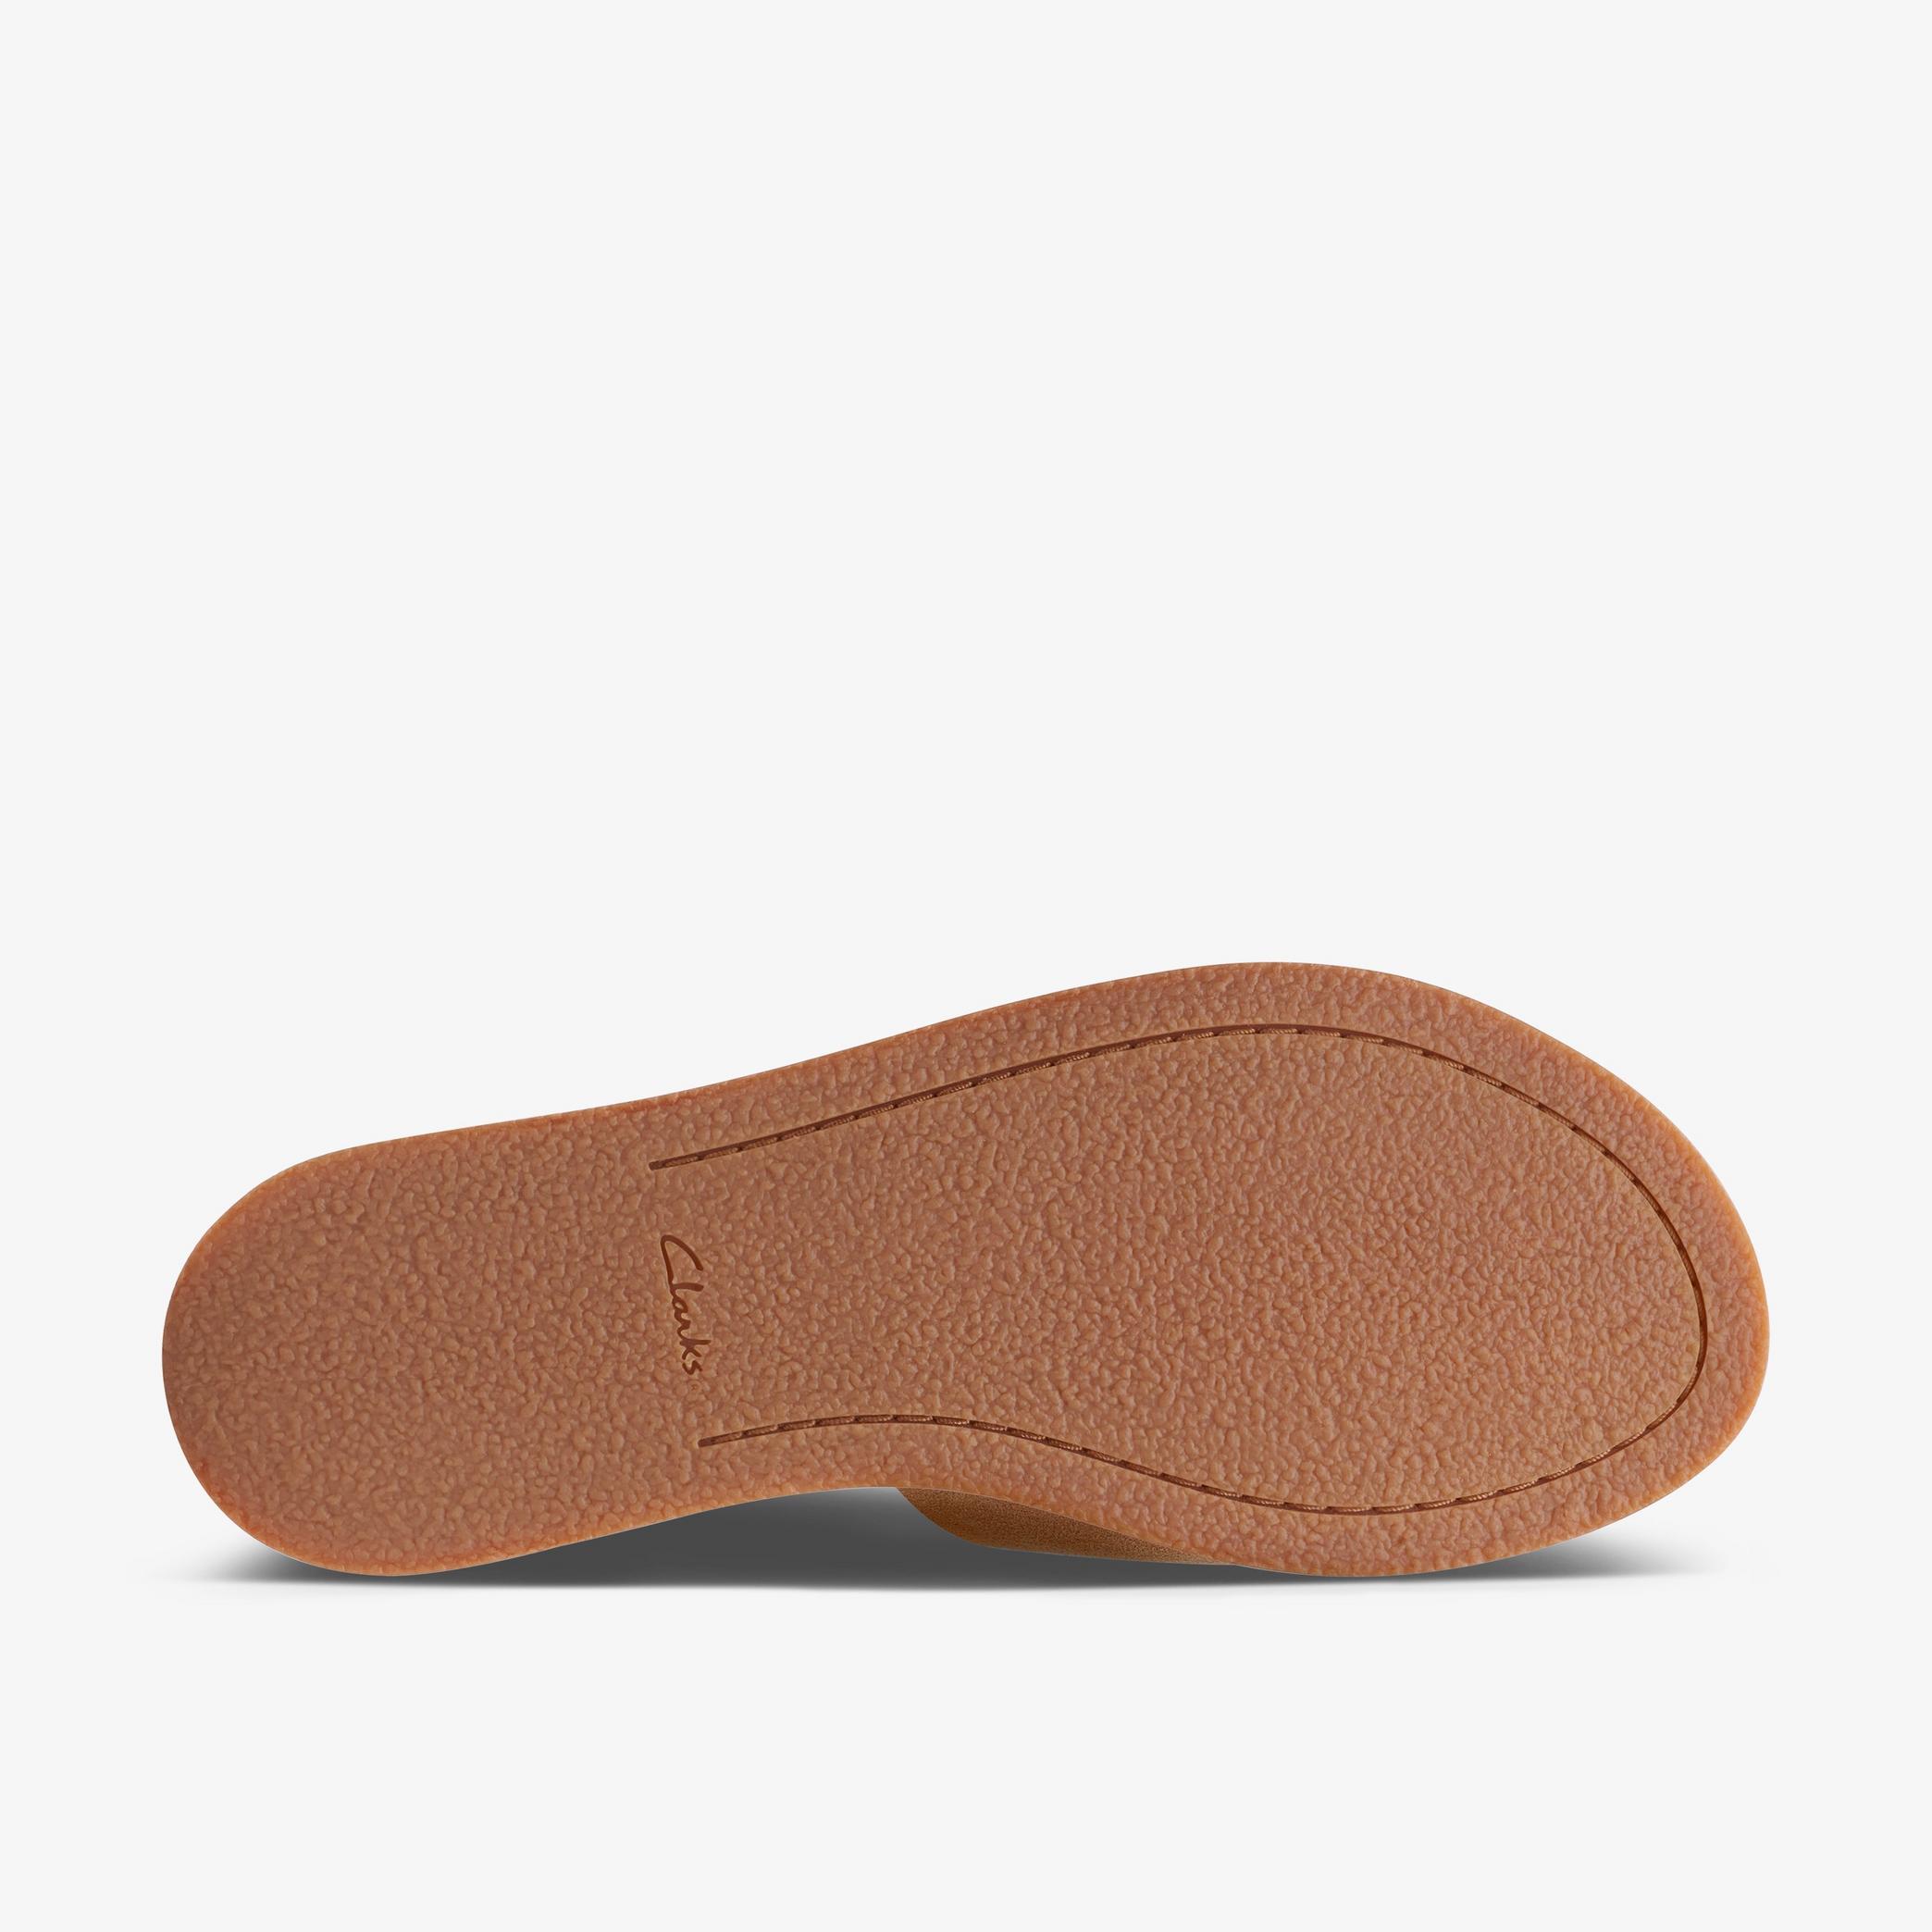 Karsea Mule Light Tan Suede Flat Sandals, view 3 of 6